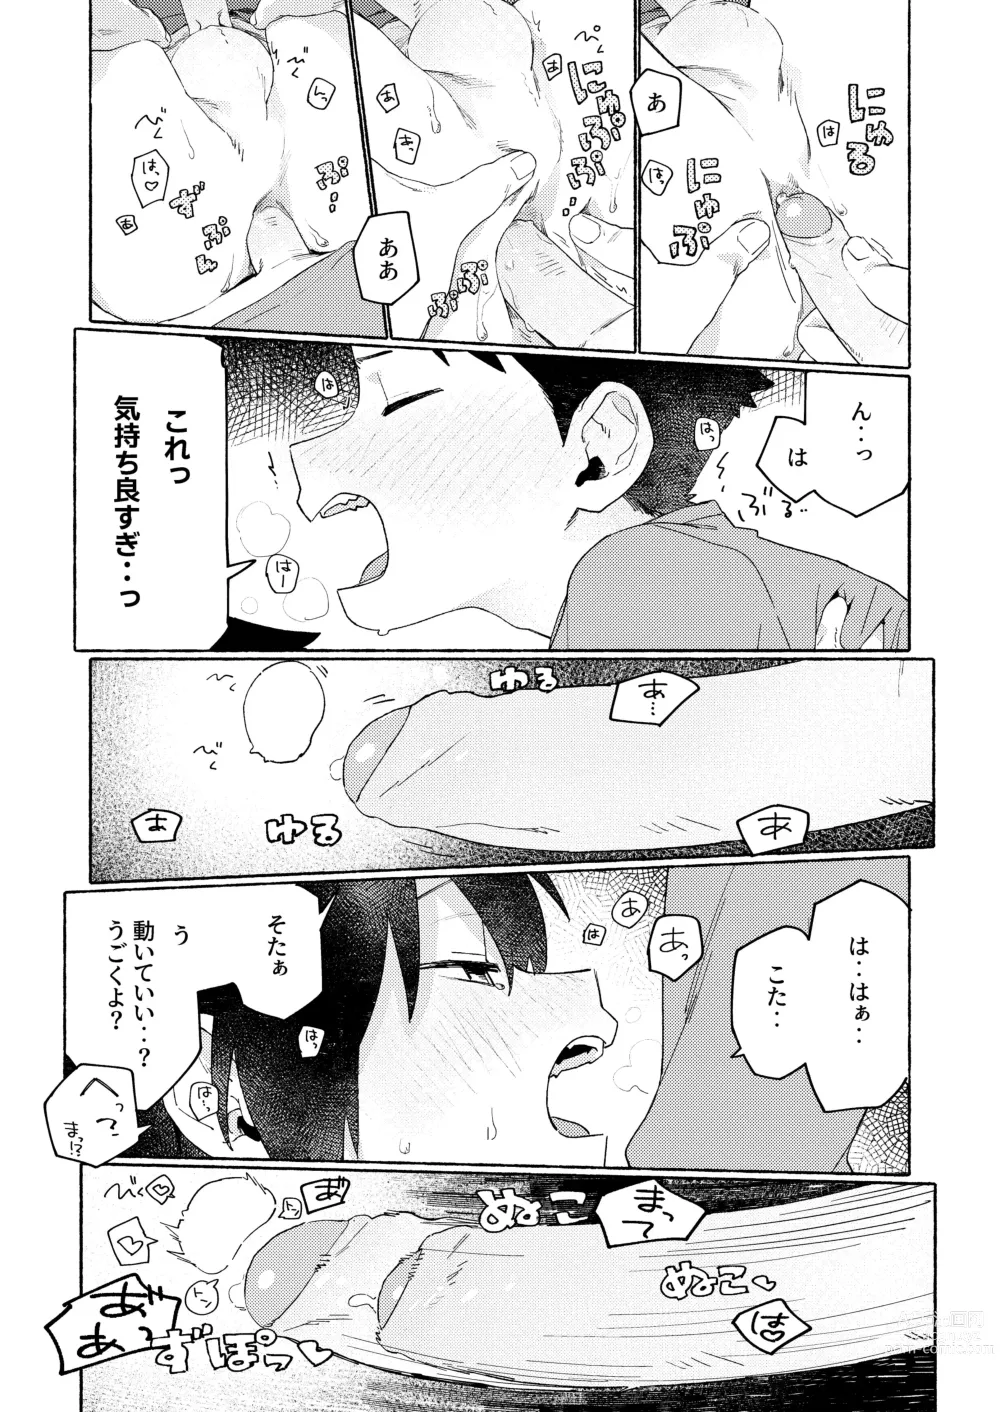 Page 7 of doujinshi Shota Sextet 6